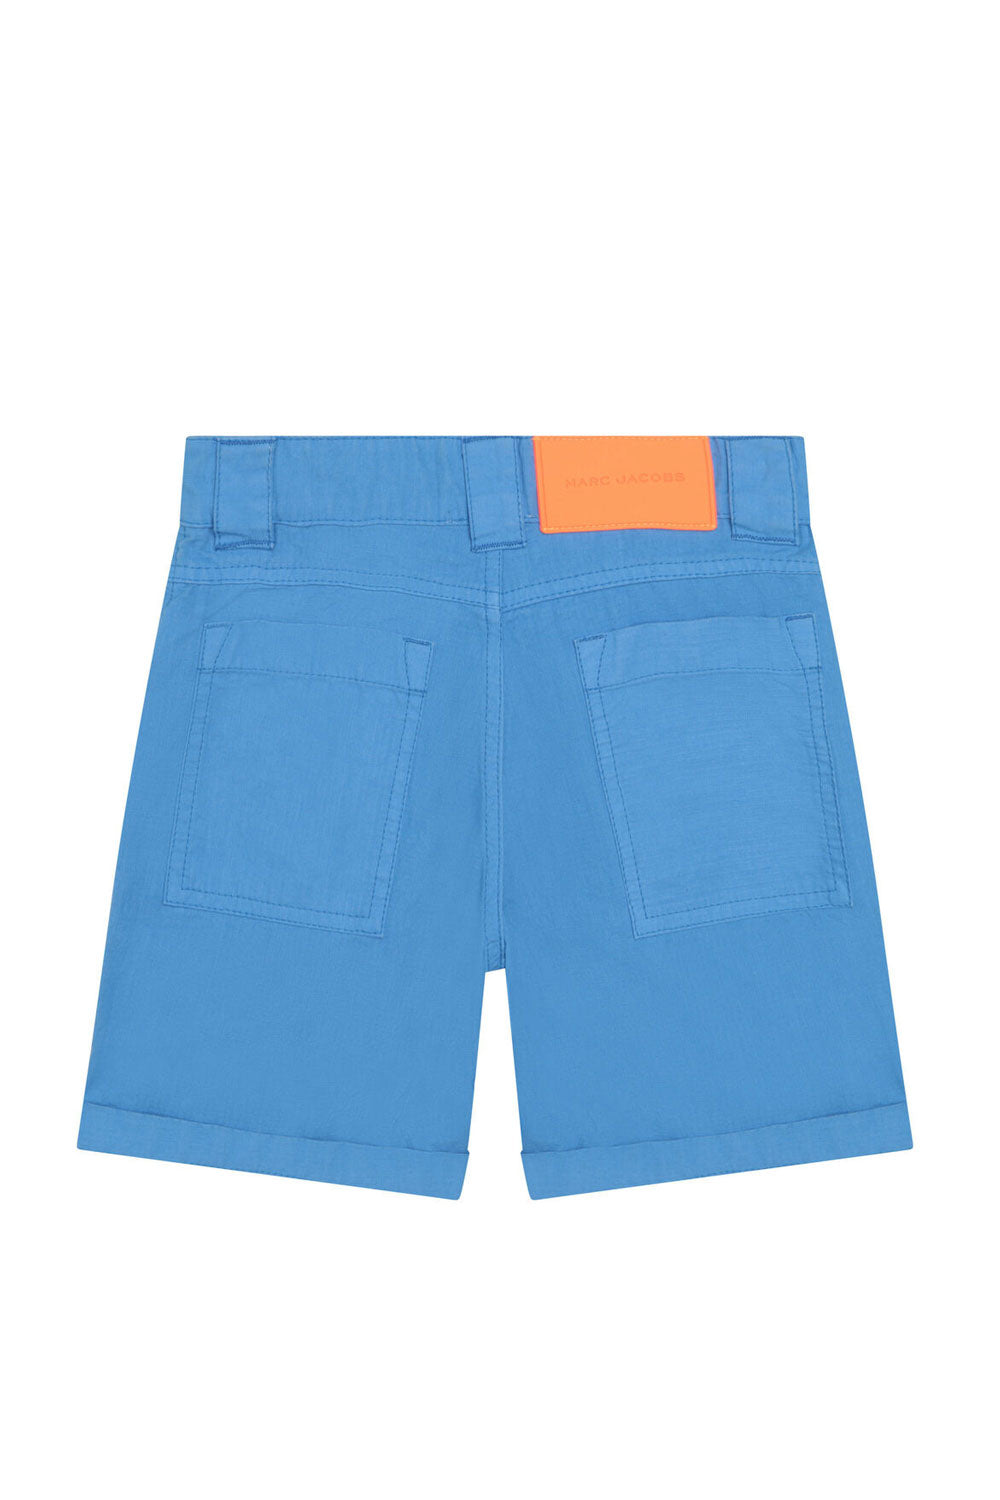 Chino Pocket Shorts for Boys Chino Pocket Shorts for Boys Maison7